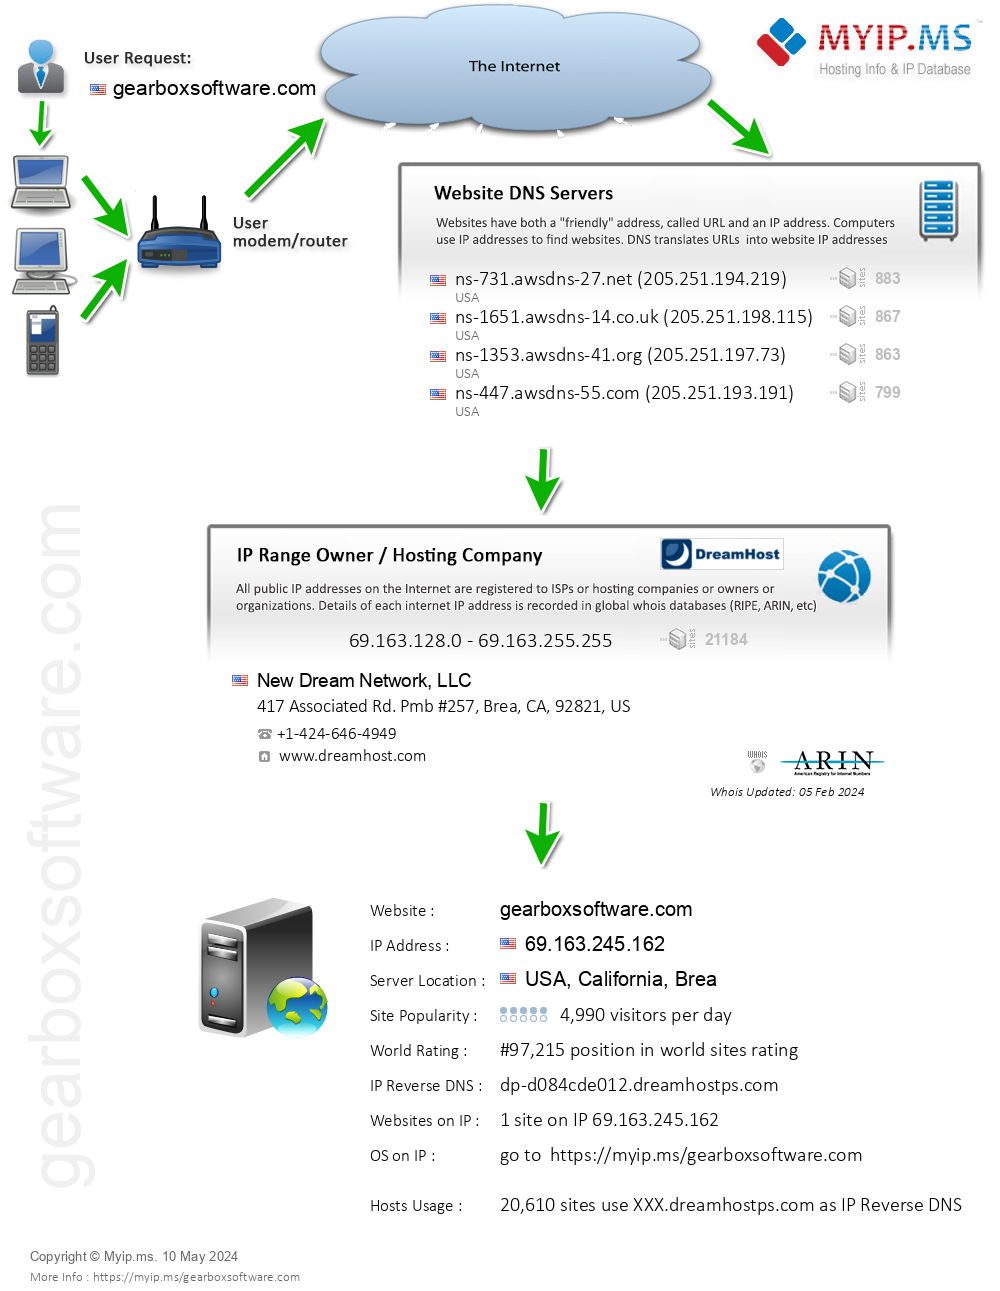 Gearboxsoftware.com - Website Hosting Visual IP Diagram